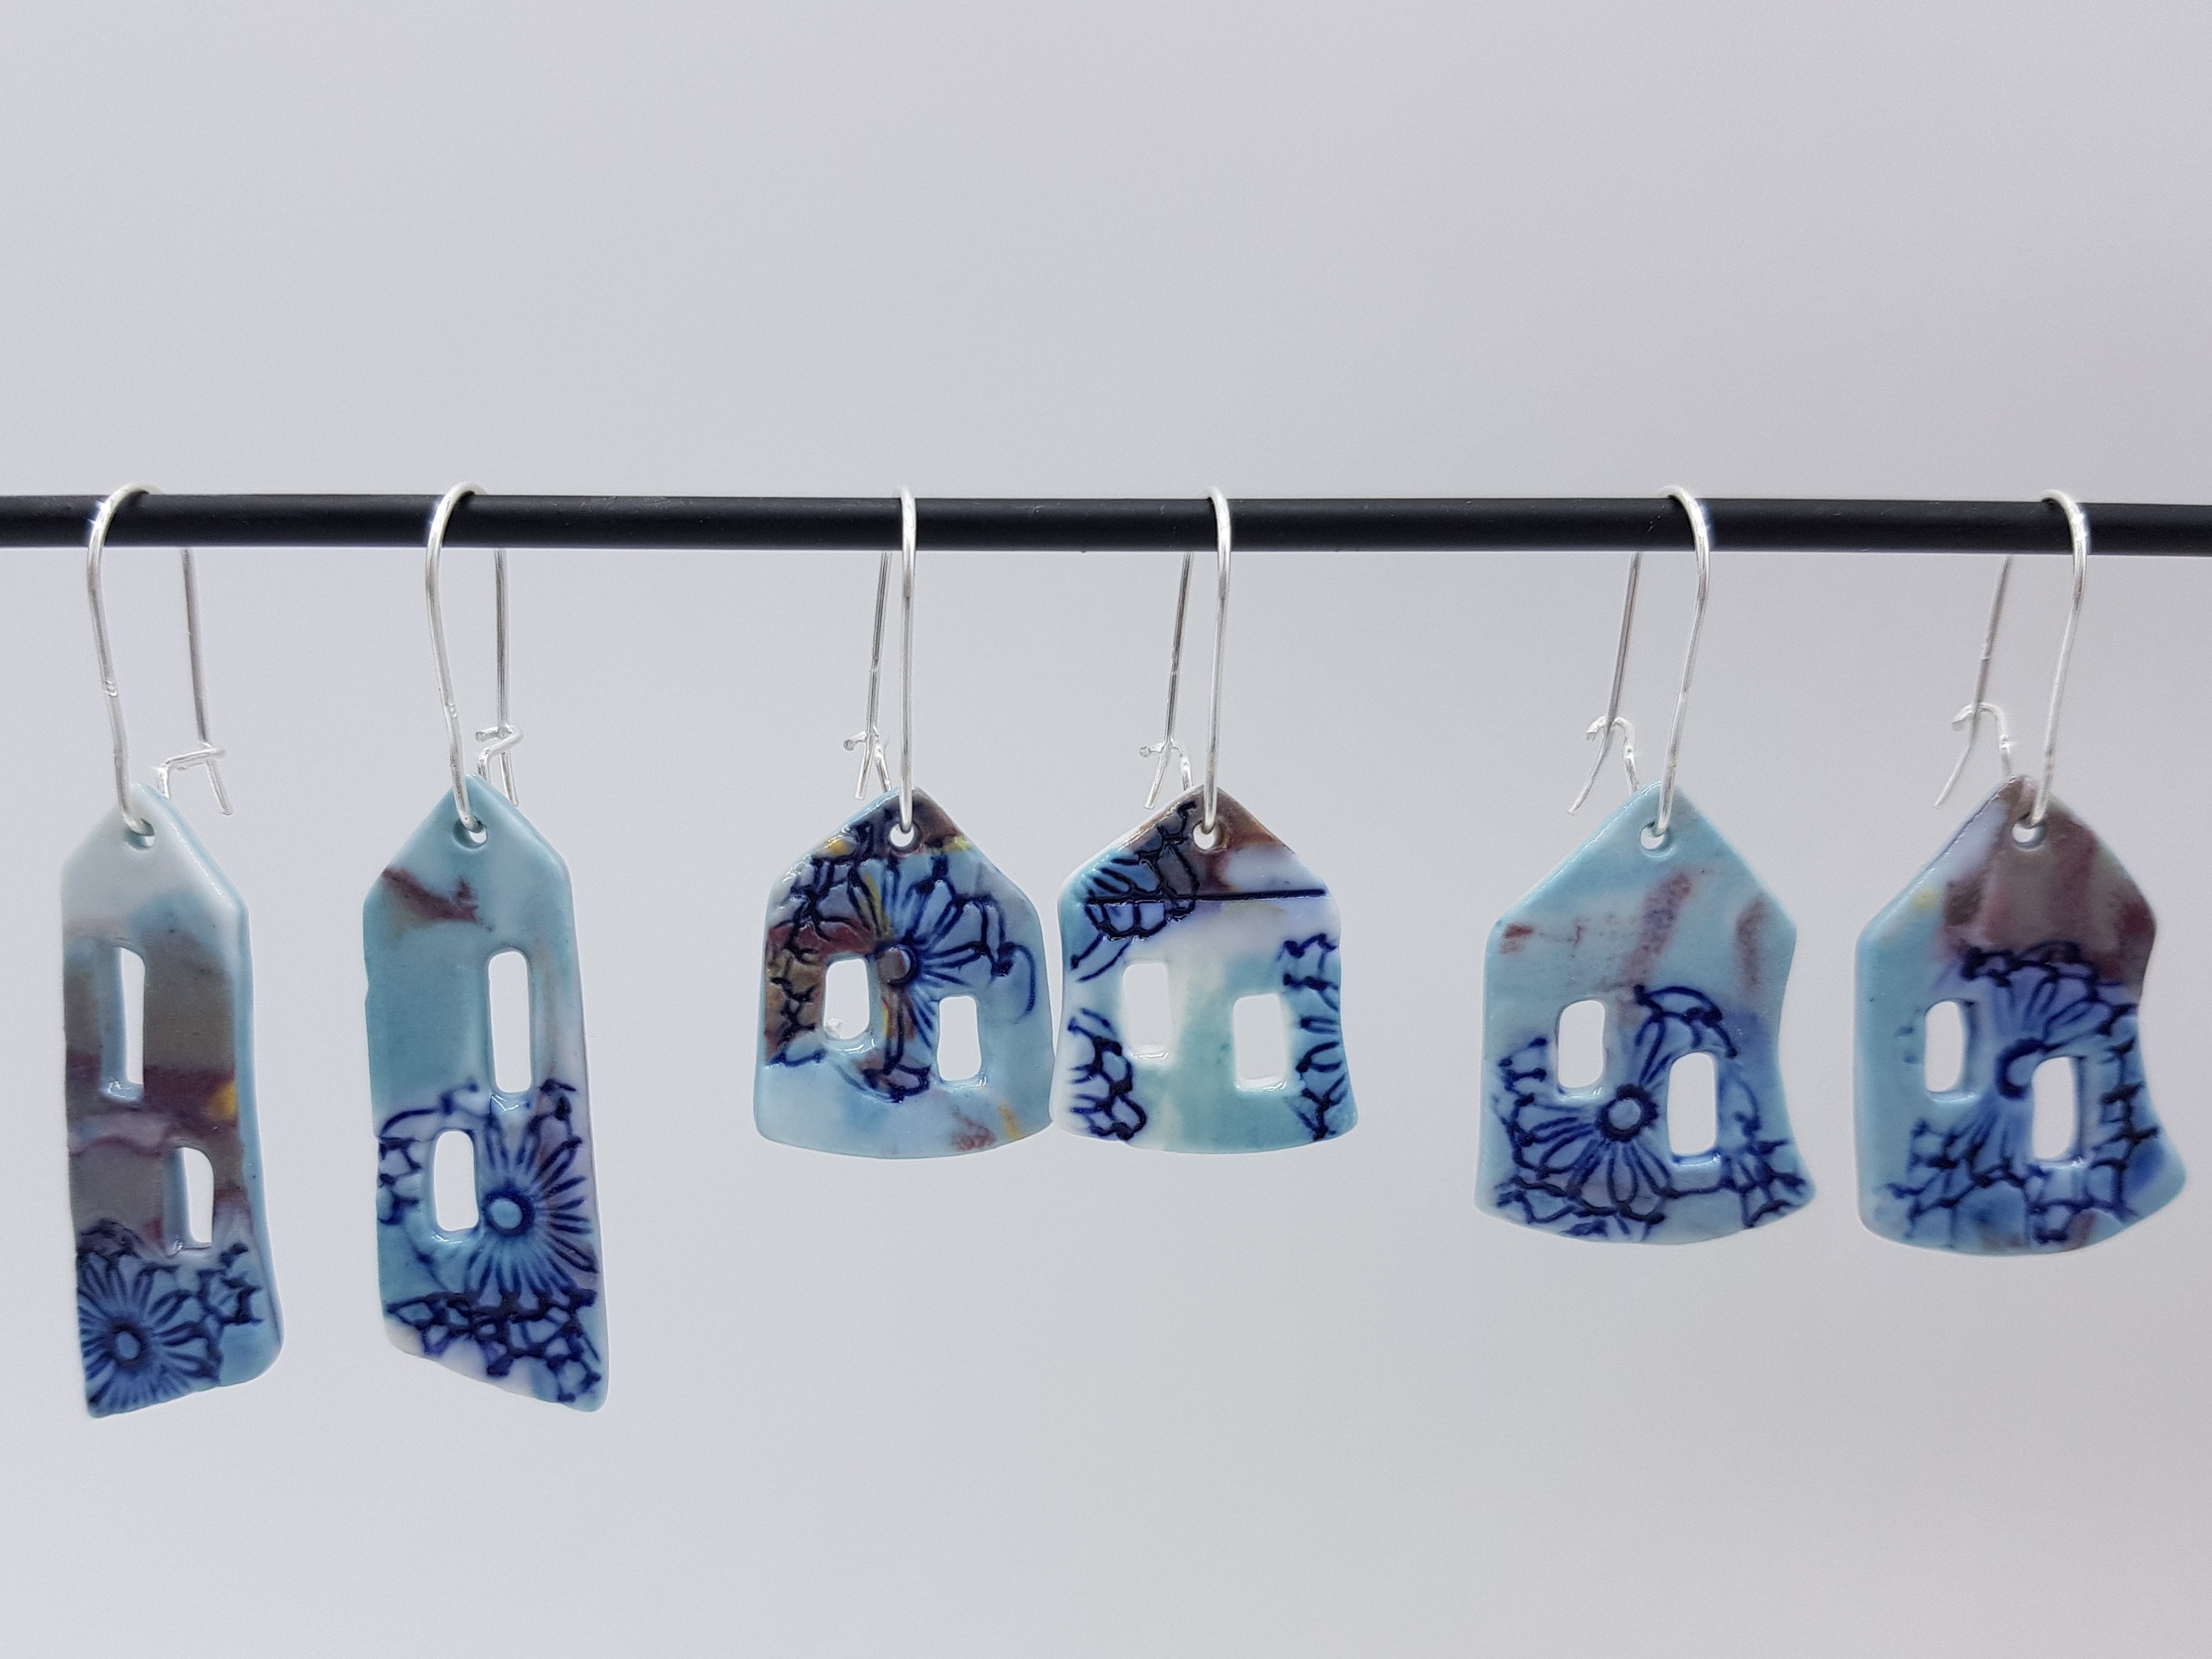 Boucles d'oreilles Maison - Collection Burano - Coloris Bleu clair 